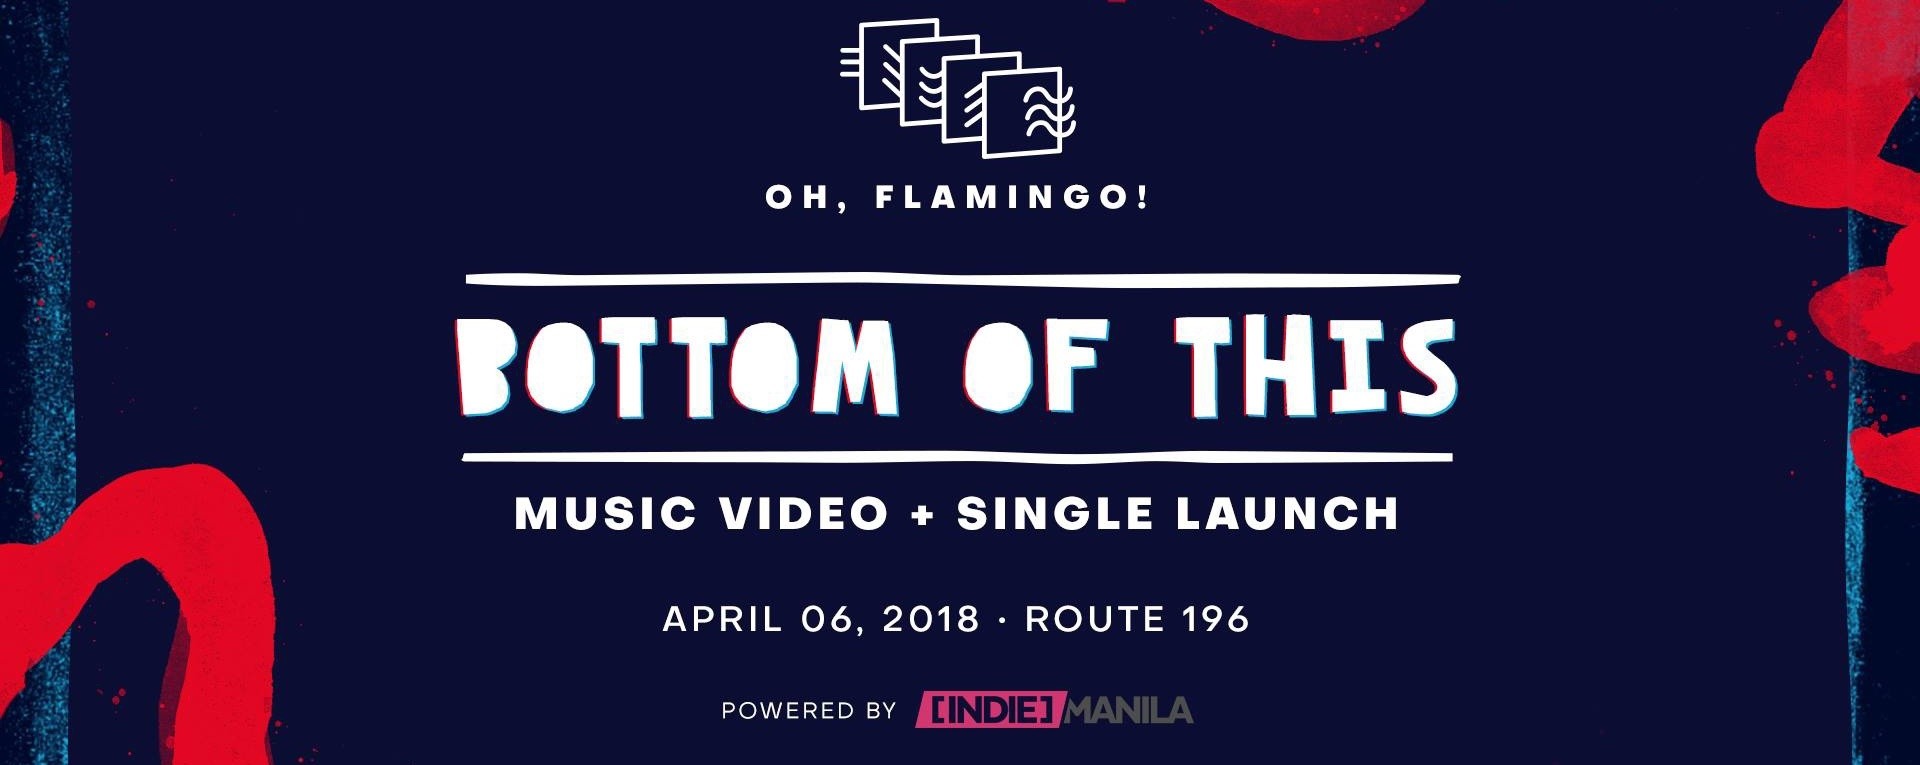 Oh, Flamingo! "Bottom of This" Single + MV Launch